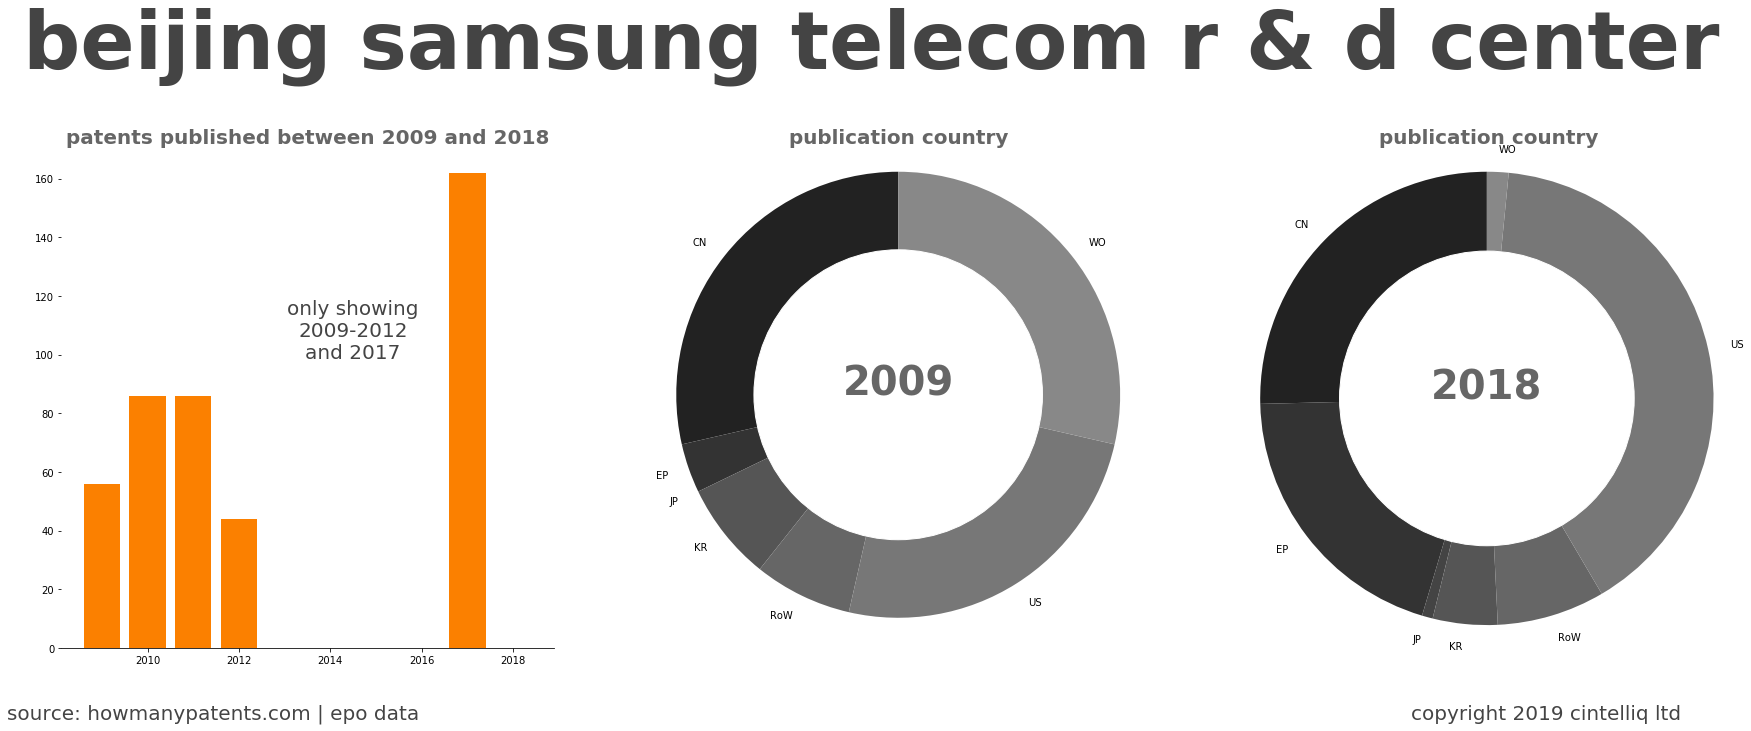 summary of patents for Beijing Samsung Telecom R & D Center